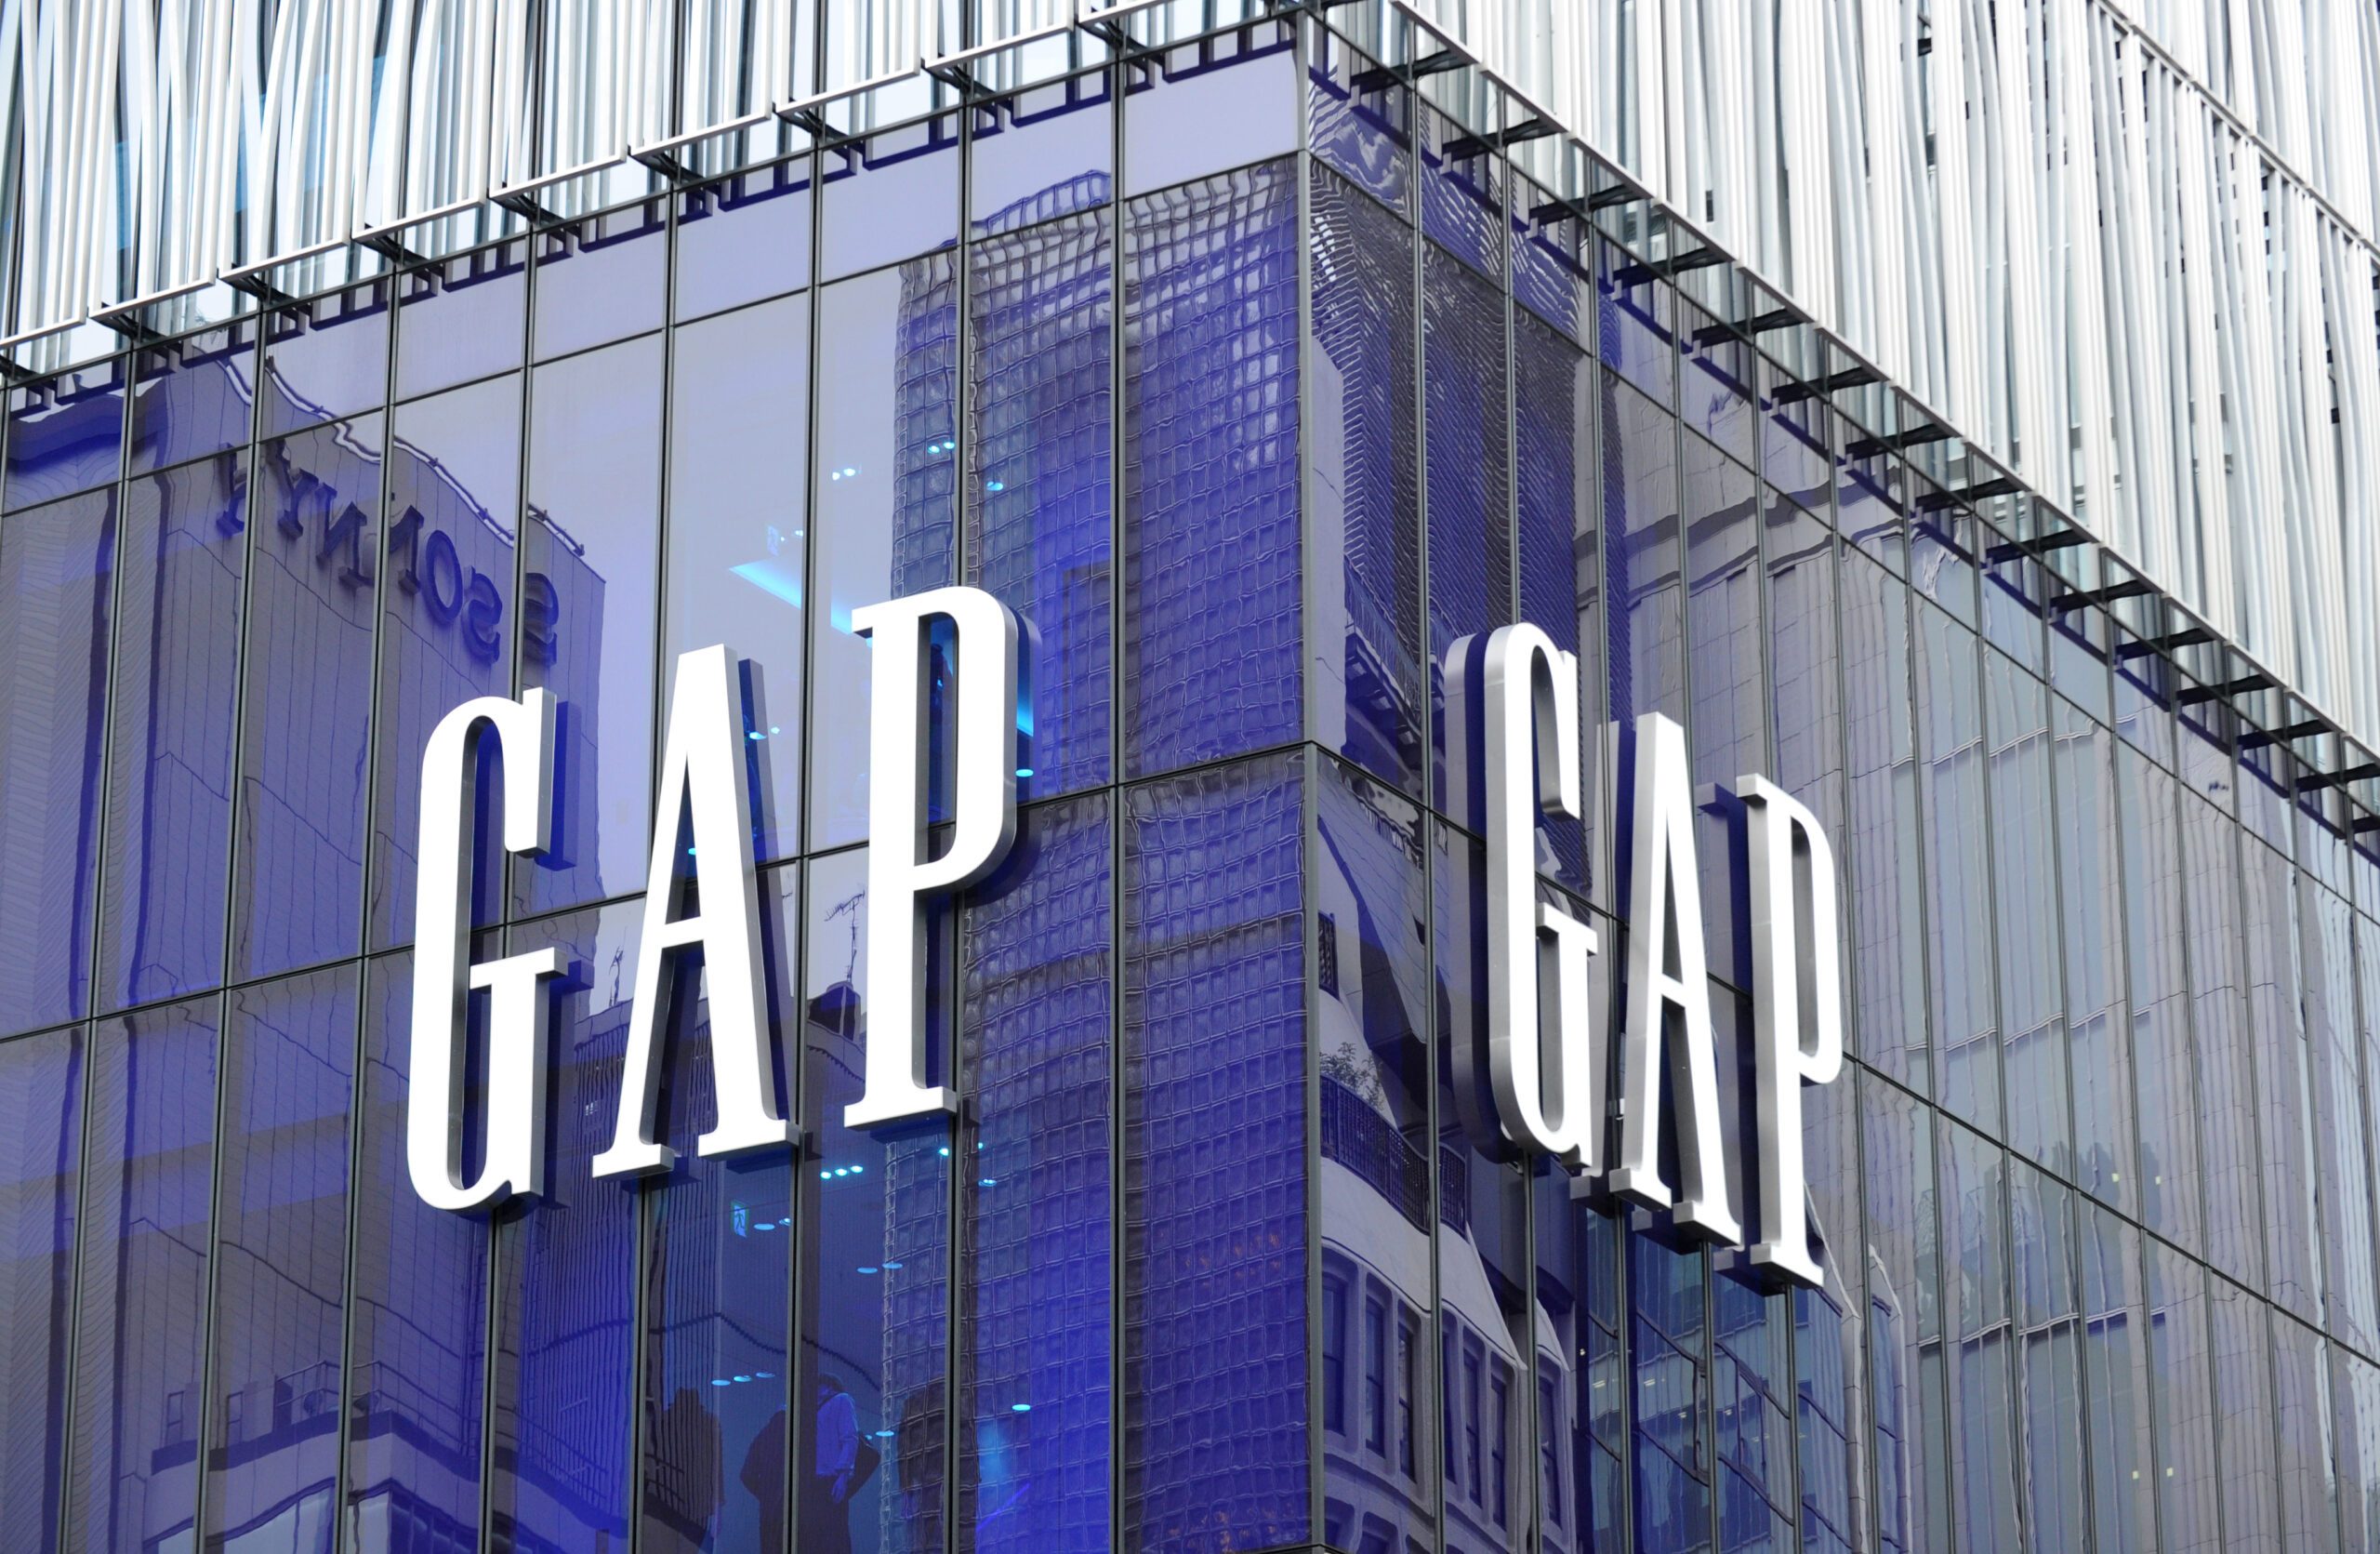 Sales slump worsens at fashion group Gap